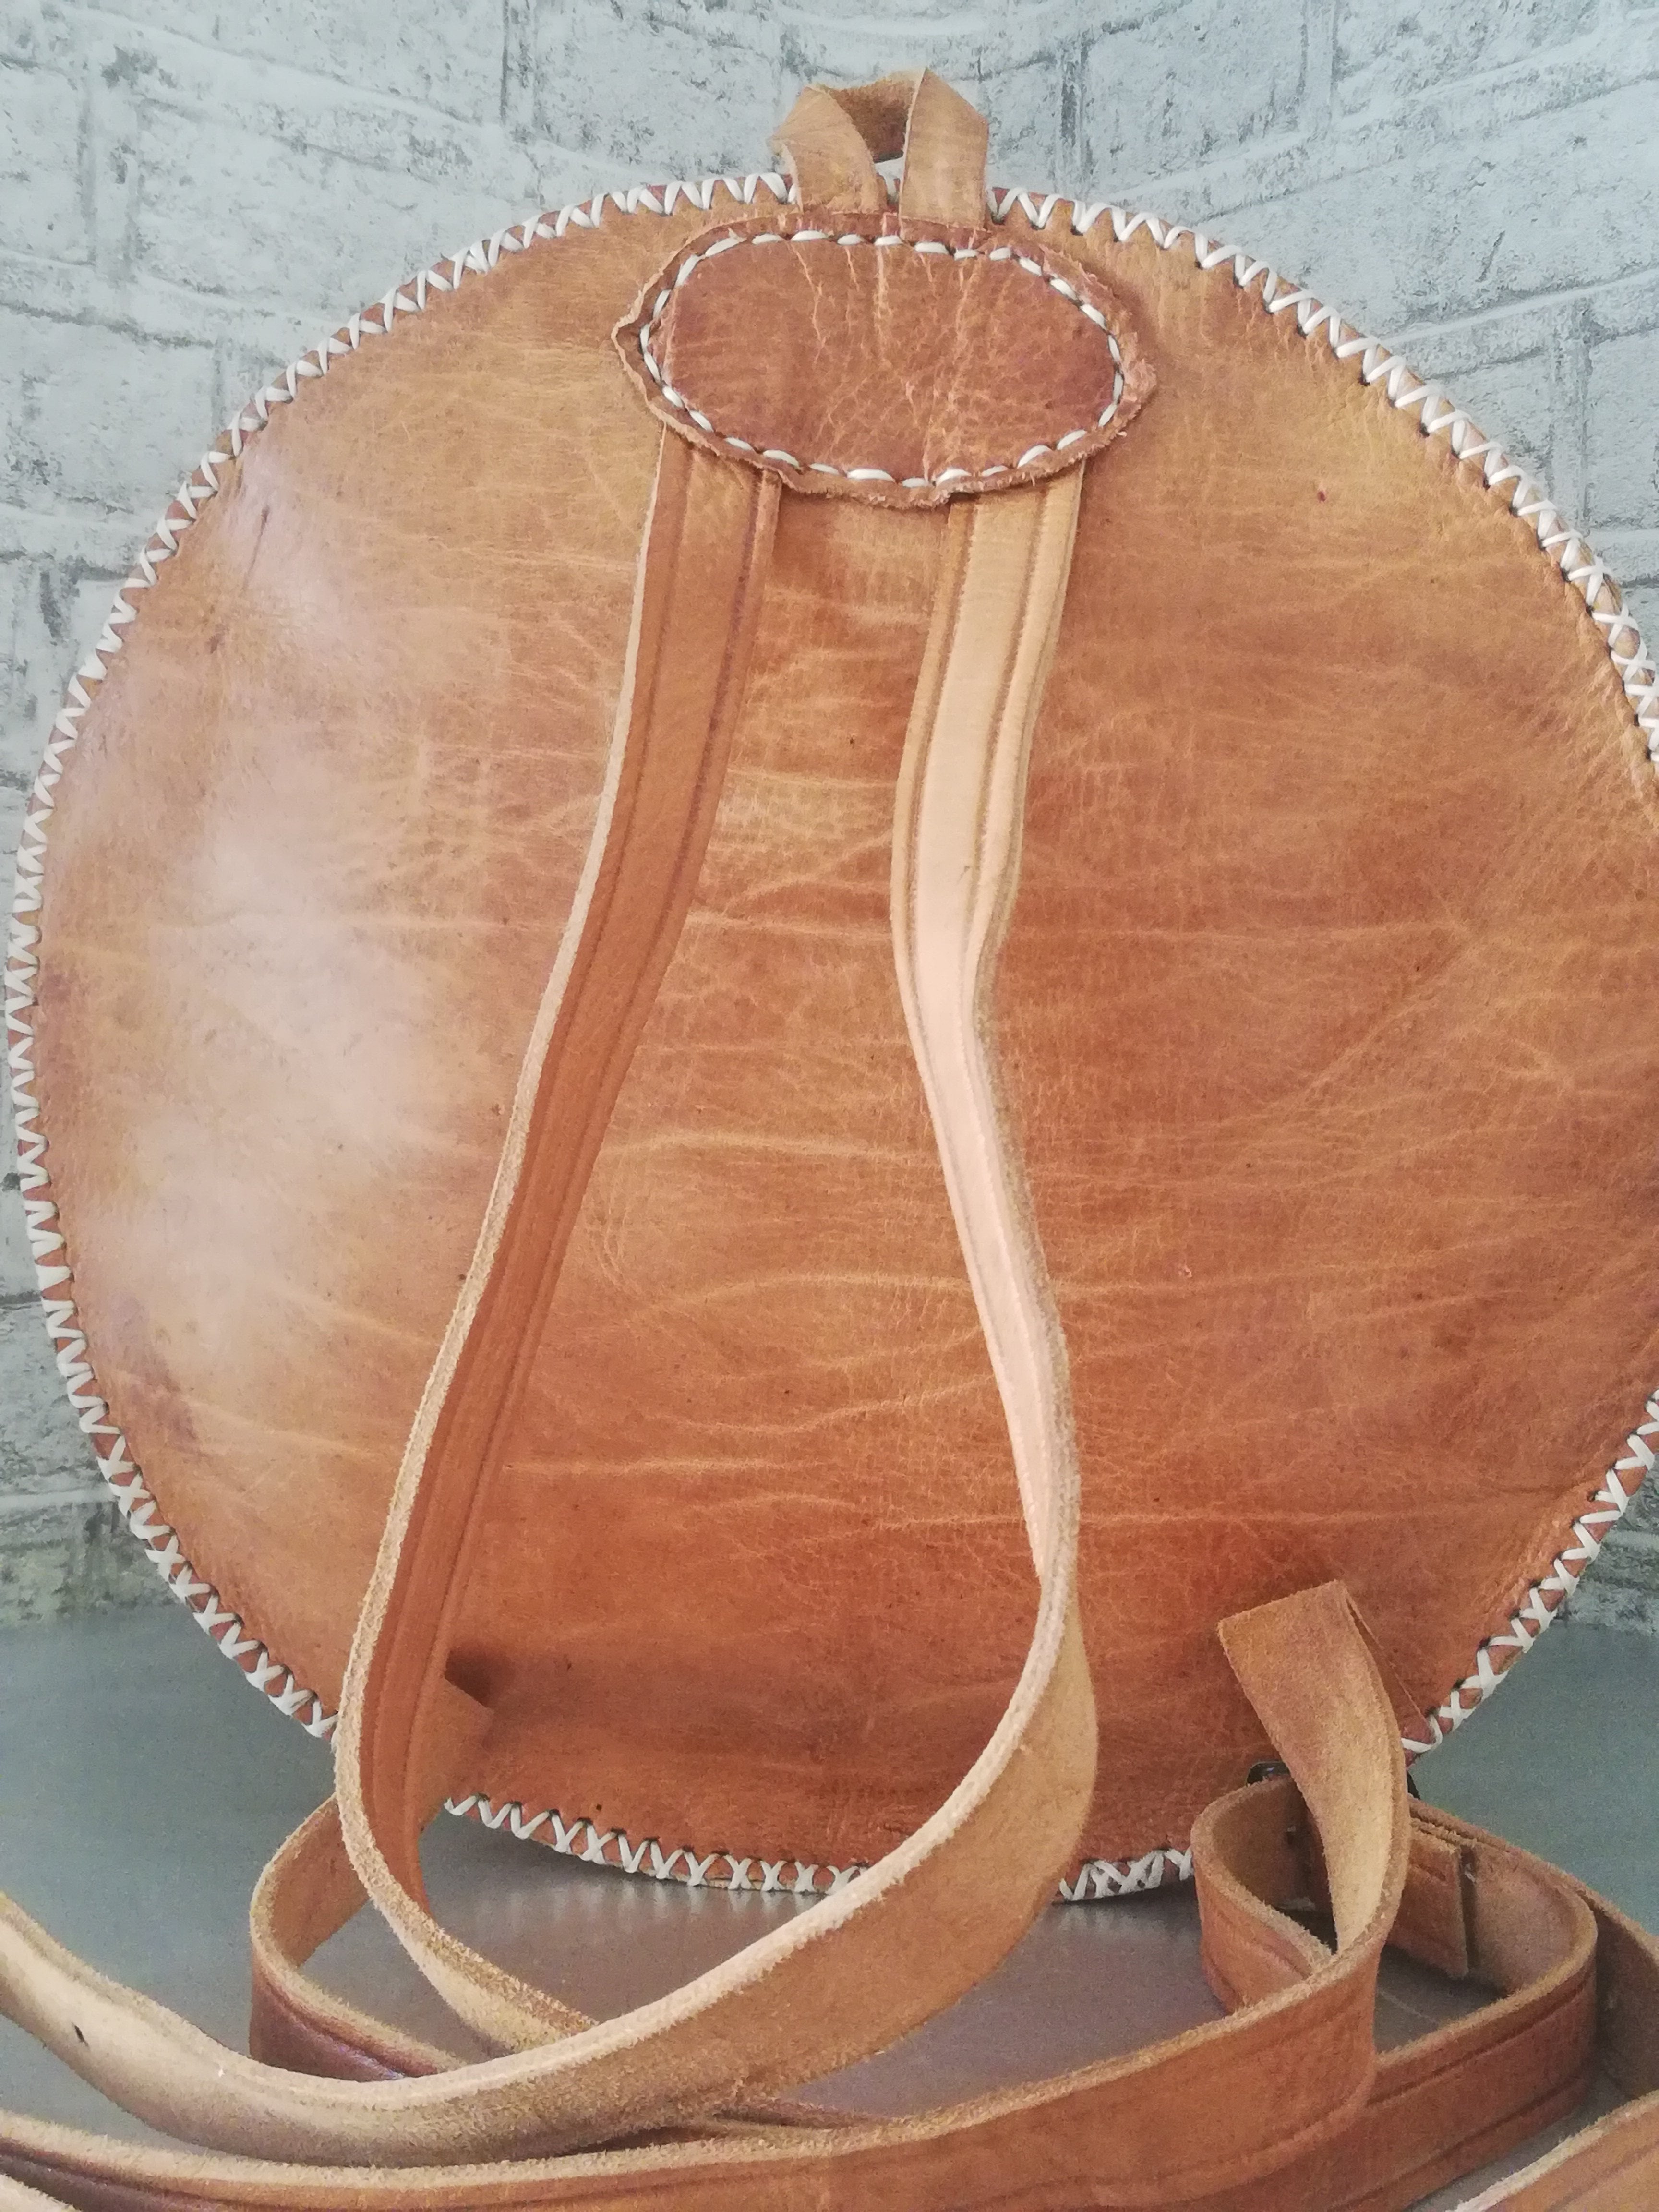 Backpacks Fashion Purse Women's New Leather Handbag Natural